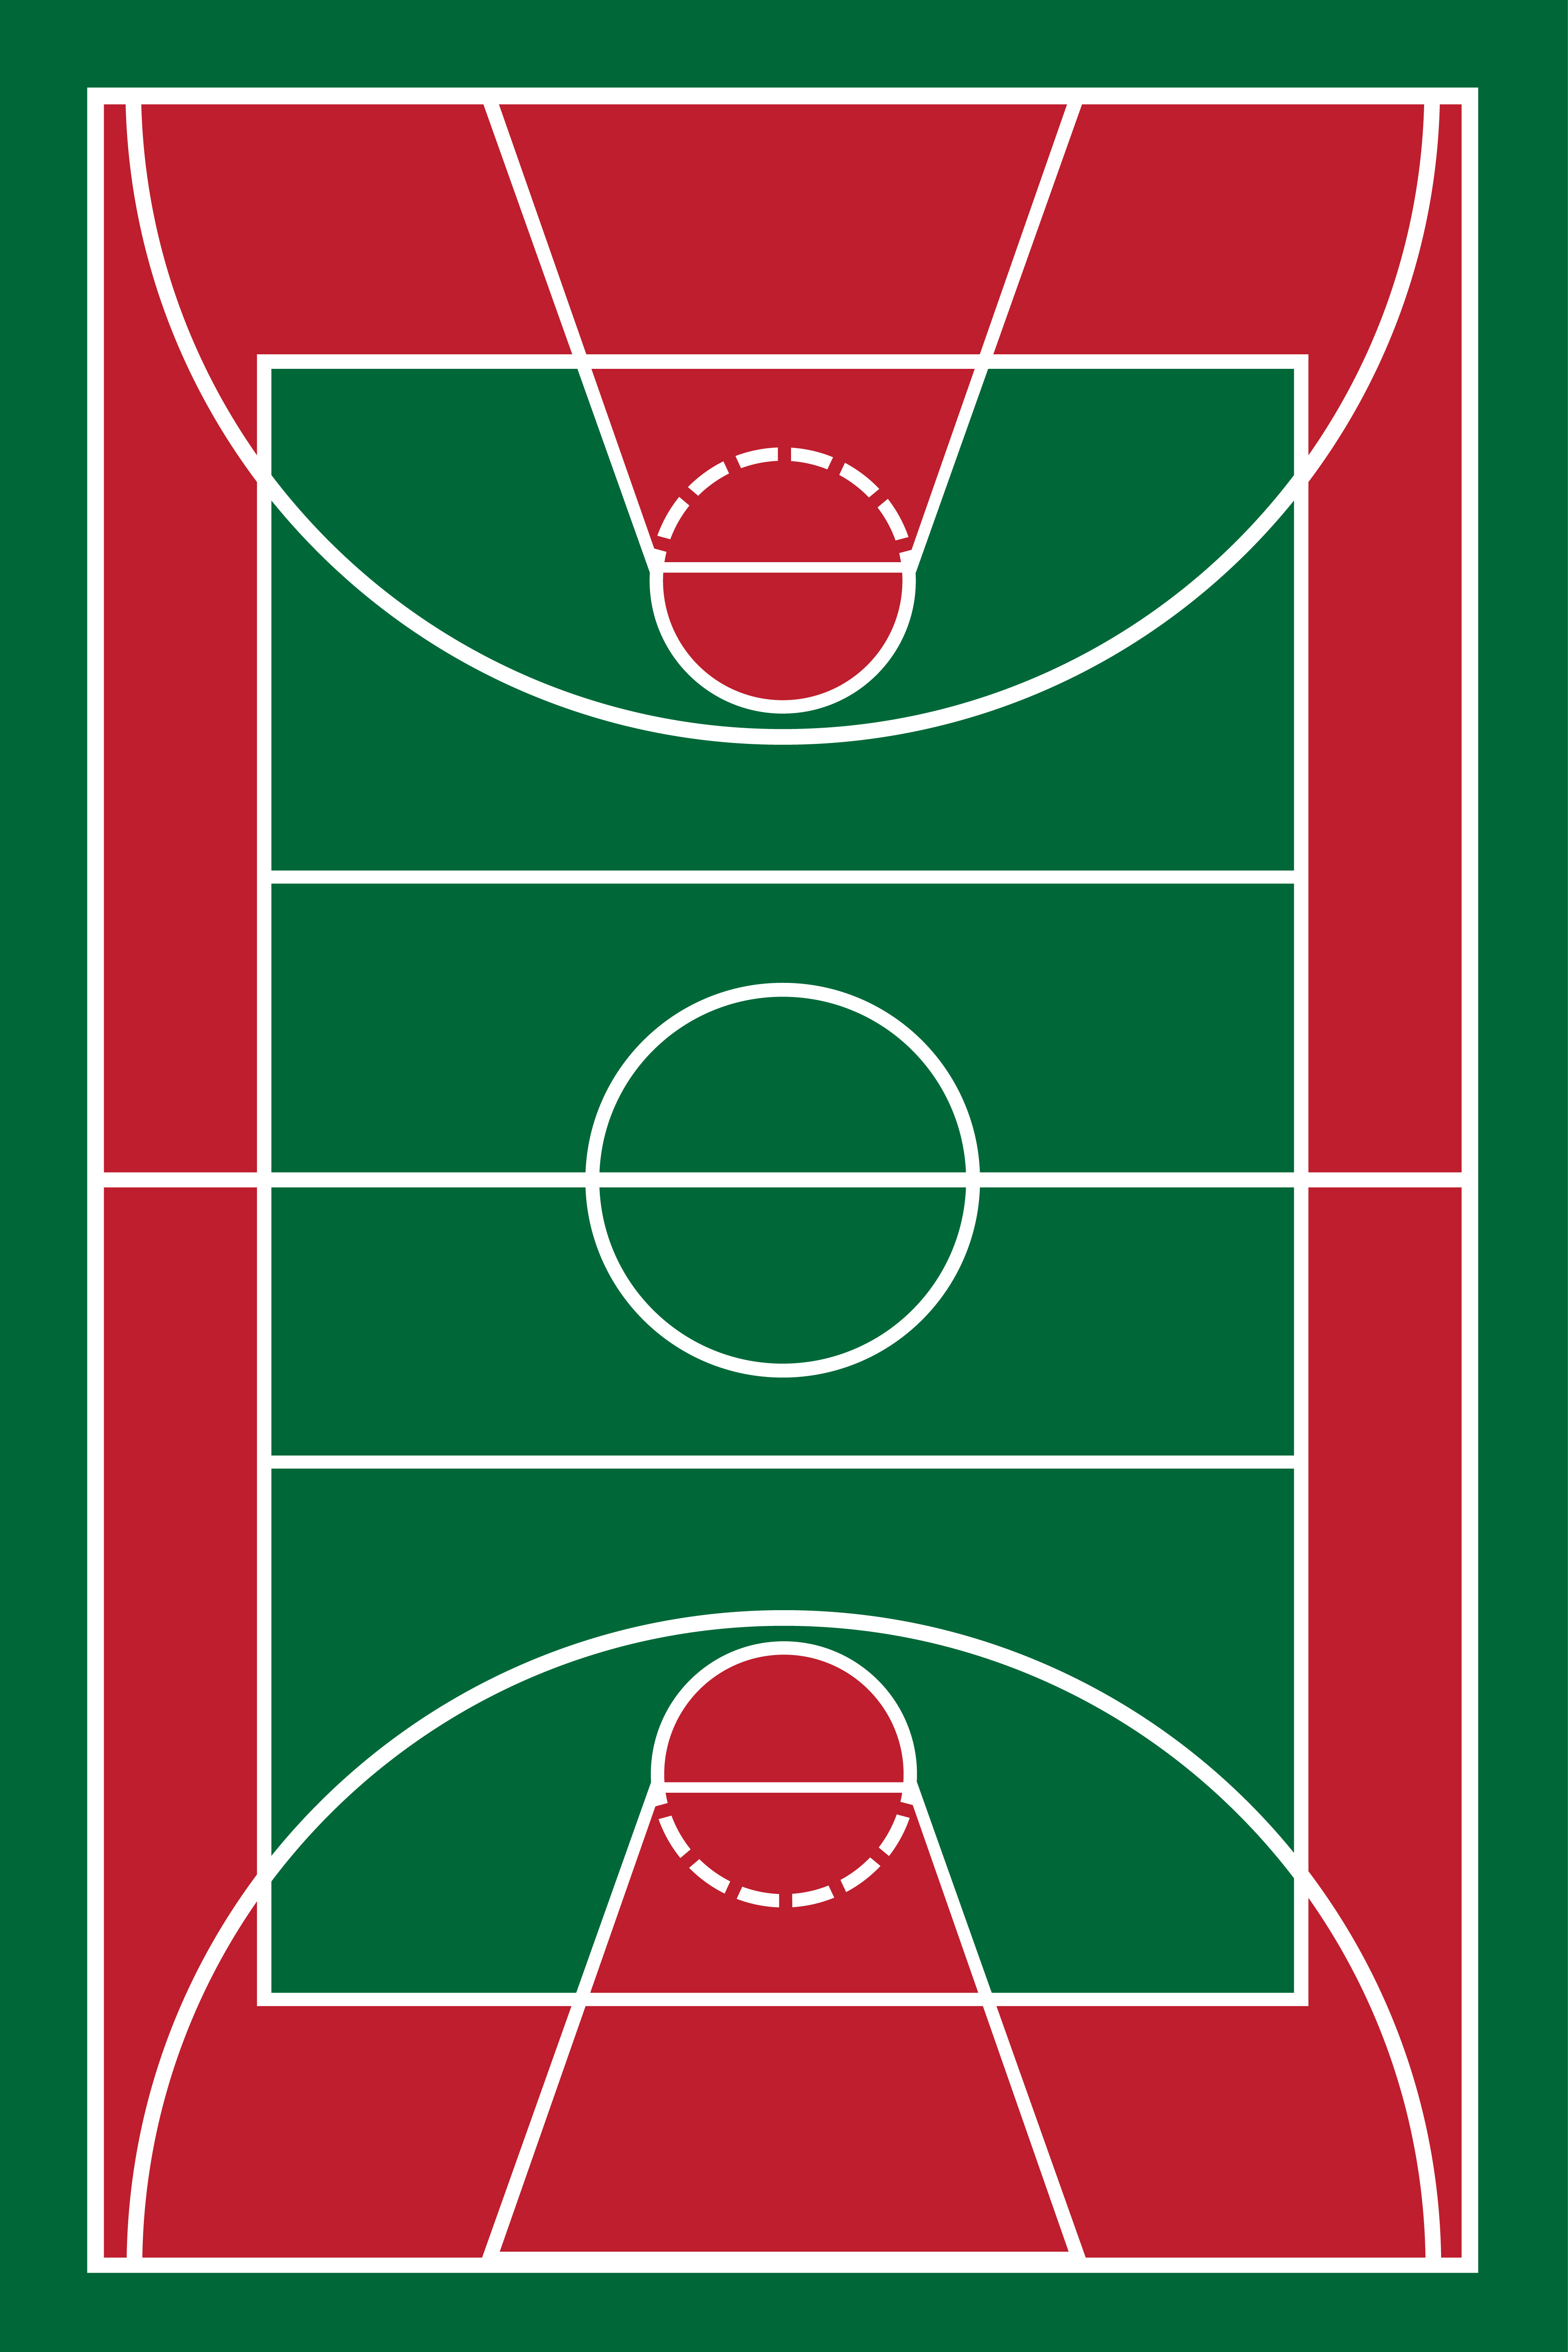 basketball court vector illustration - Download Free Vectors, Clipart